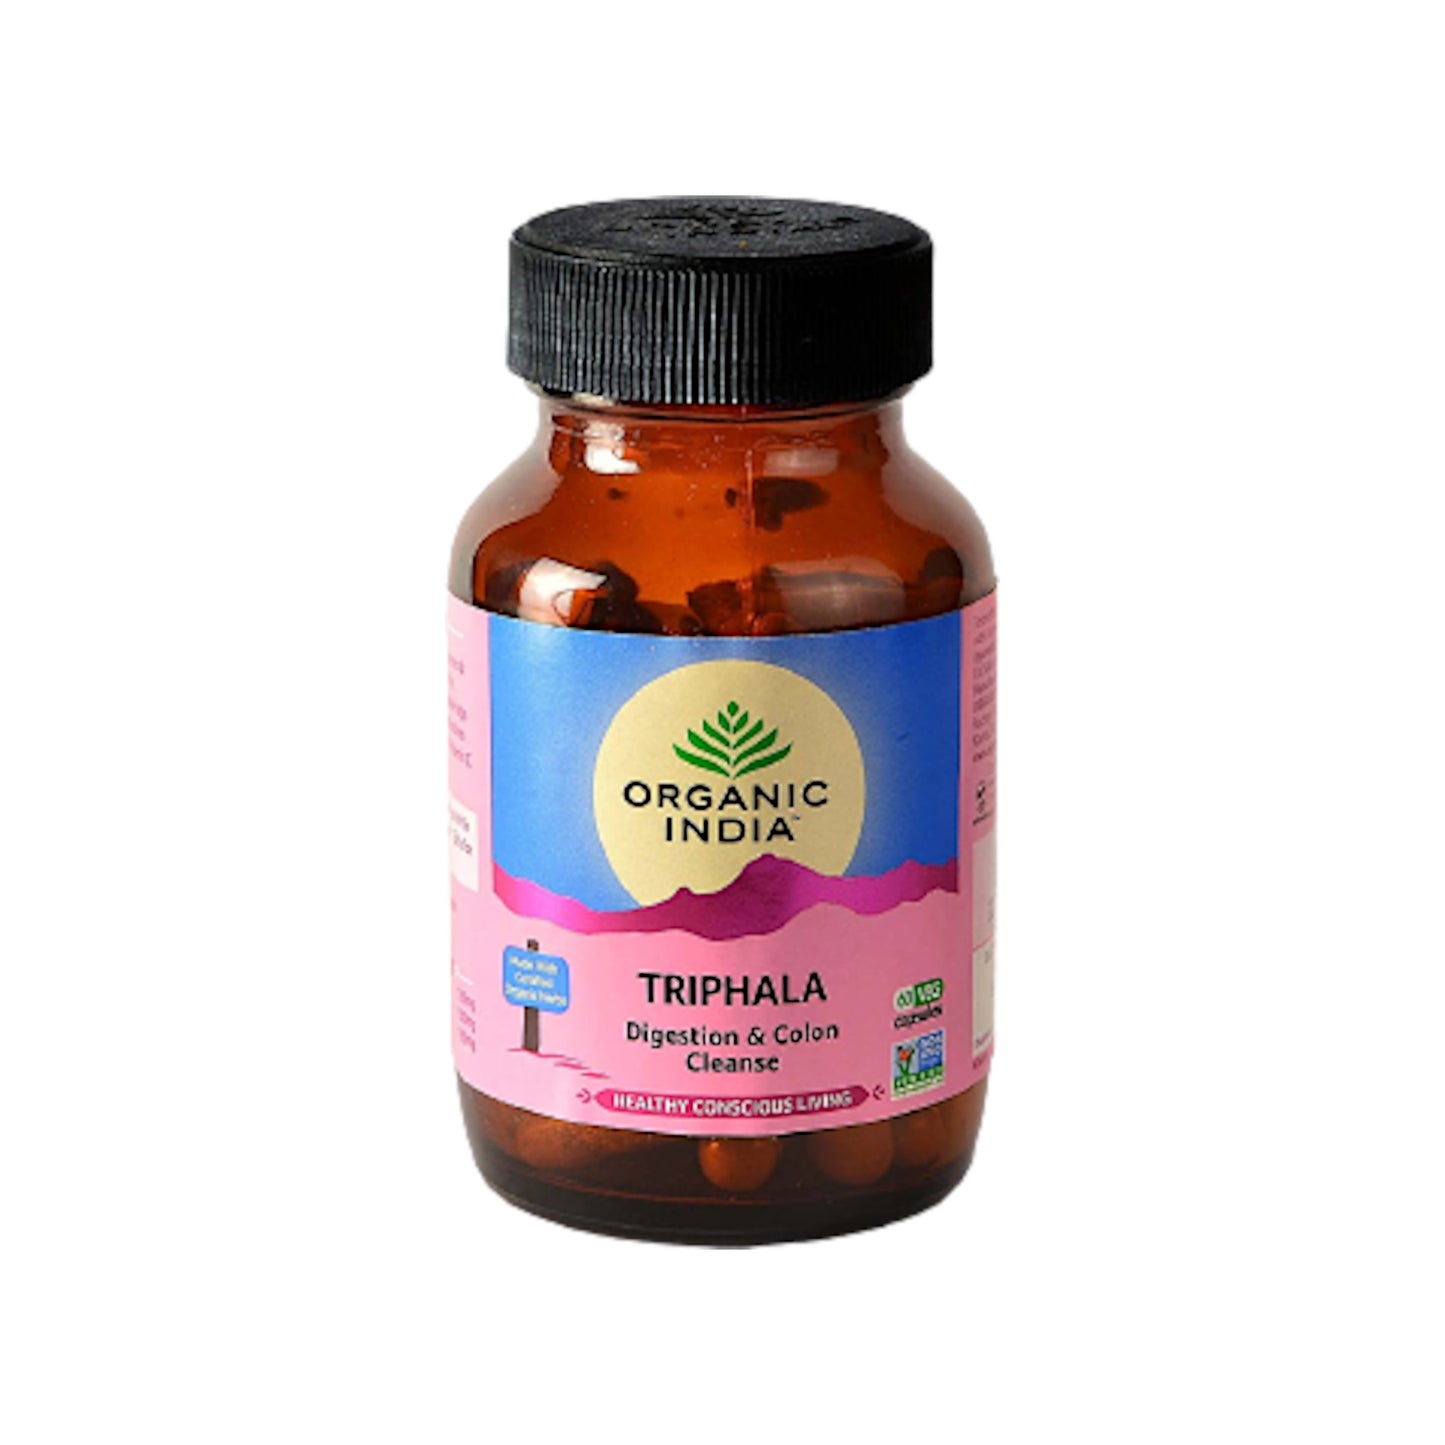 Image: Organic India Triphala 60 Capsules - Natural Digestive Support.